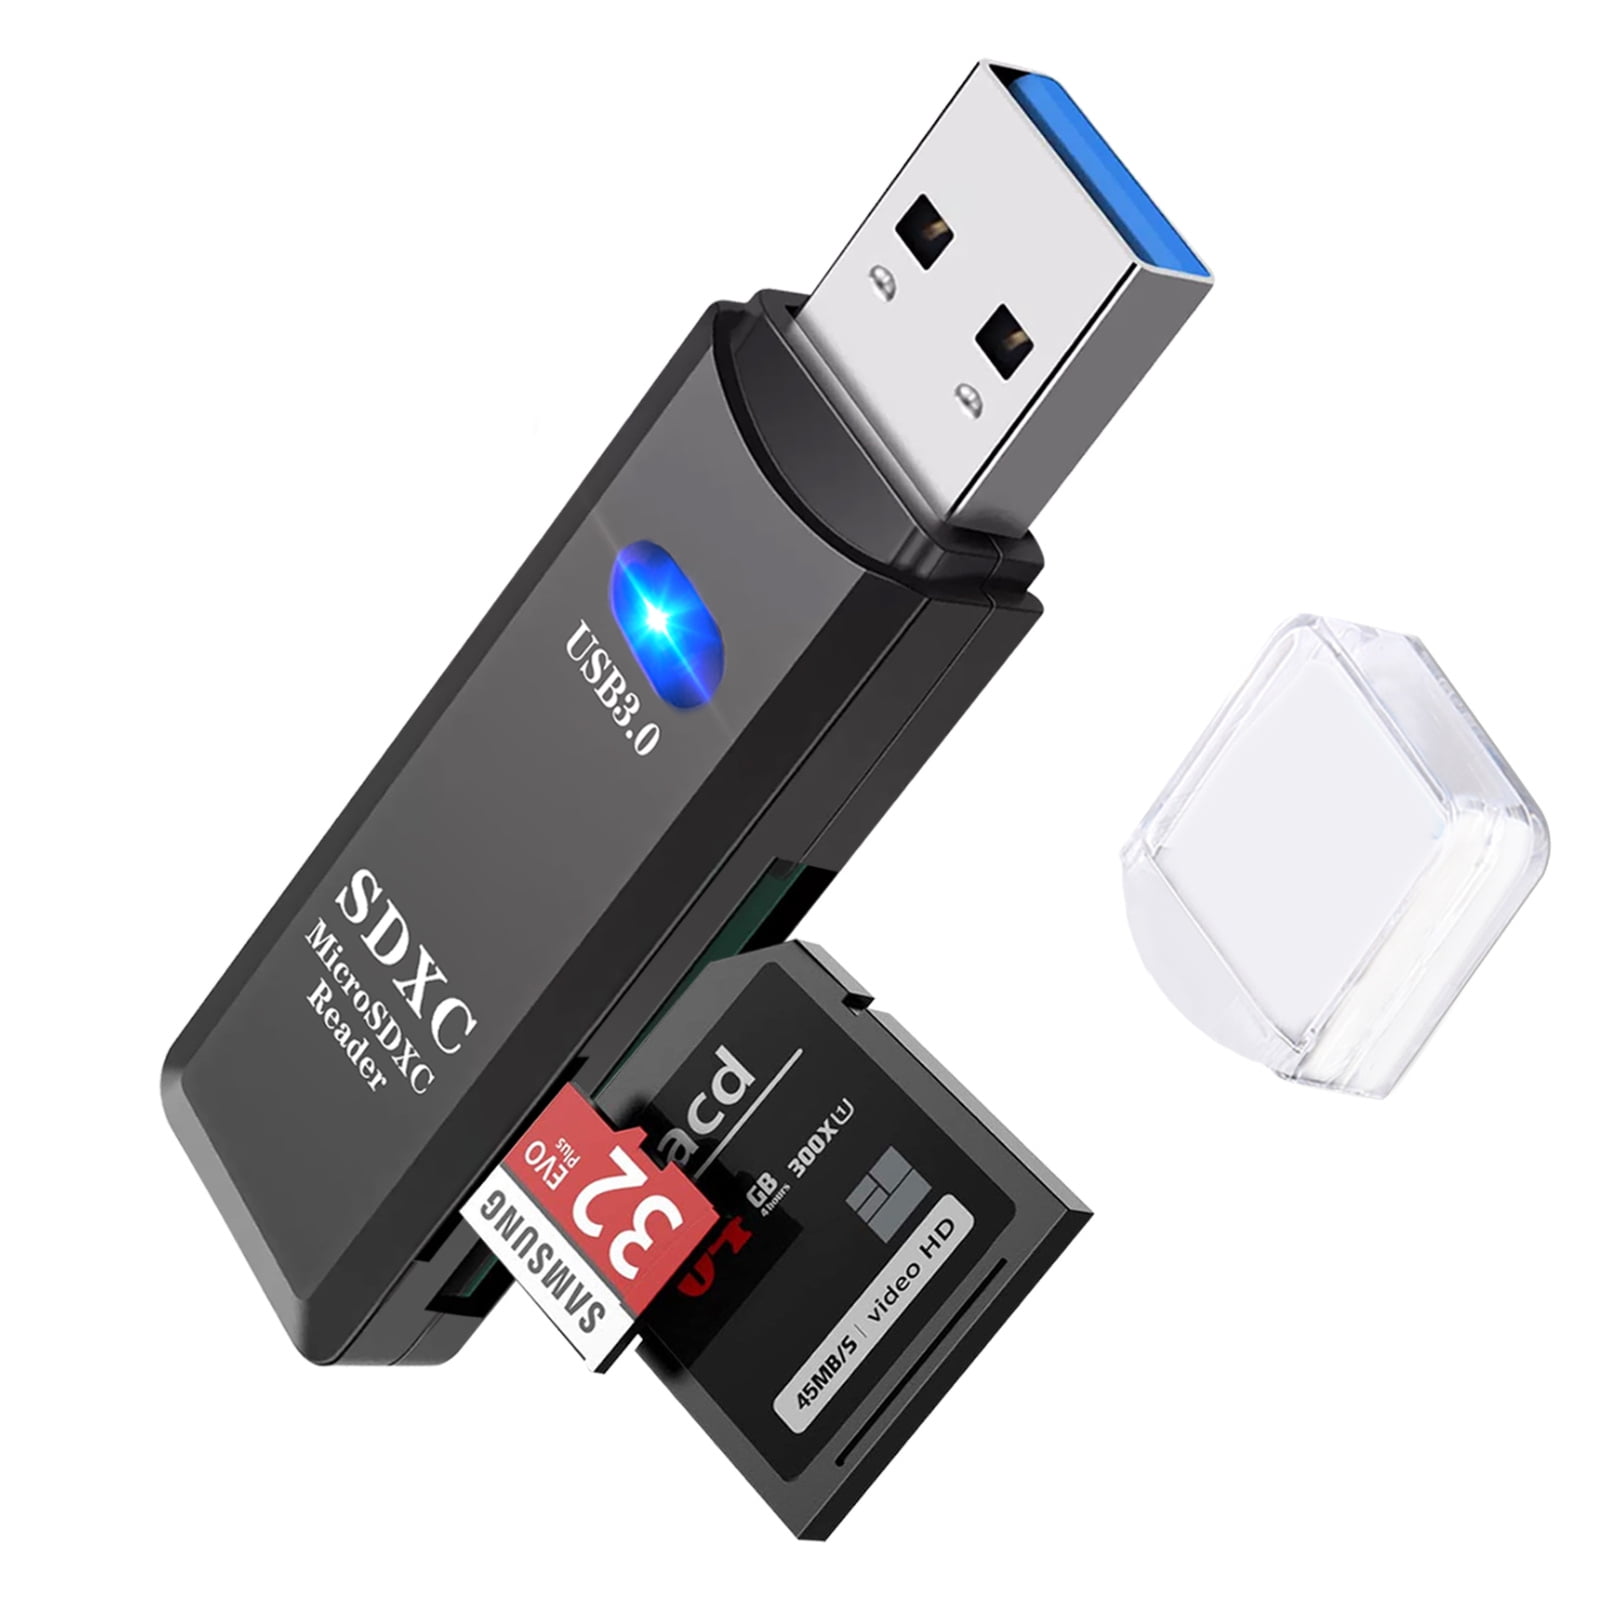 TSV USB 3.0 Portable Card Reader for SD, SDHC, SDXC, MicroSD, MicroSDHC, MicroSDXC, All-in-One Design - USB 3.0 Micro and SD Card Reader fits Mac, Windows, Linux, Chrome, PC, Laptop -